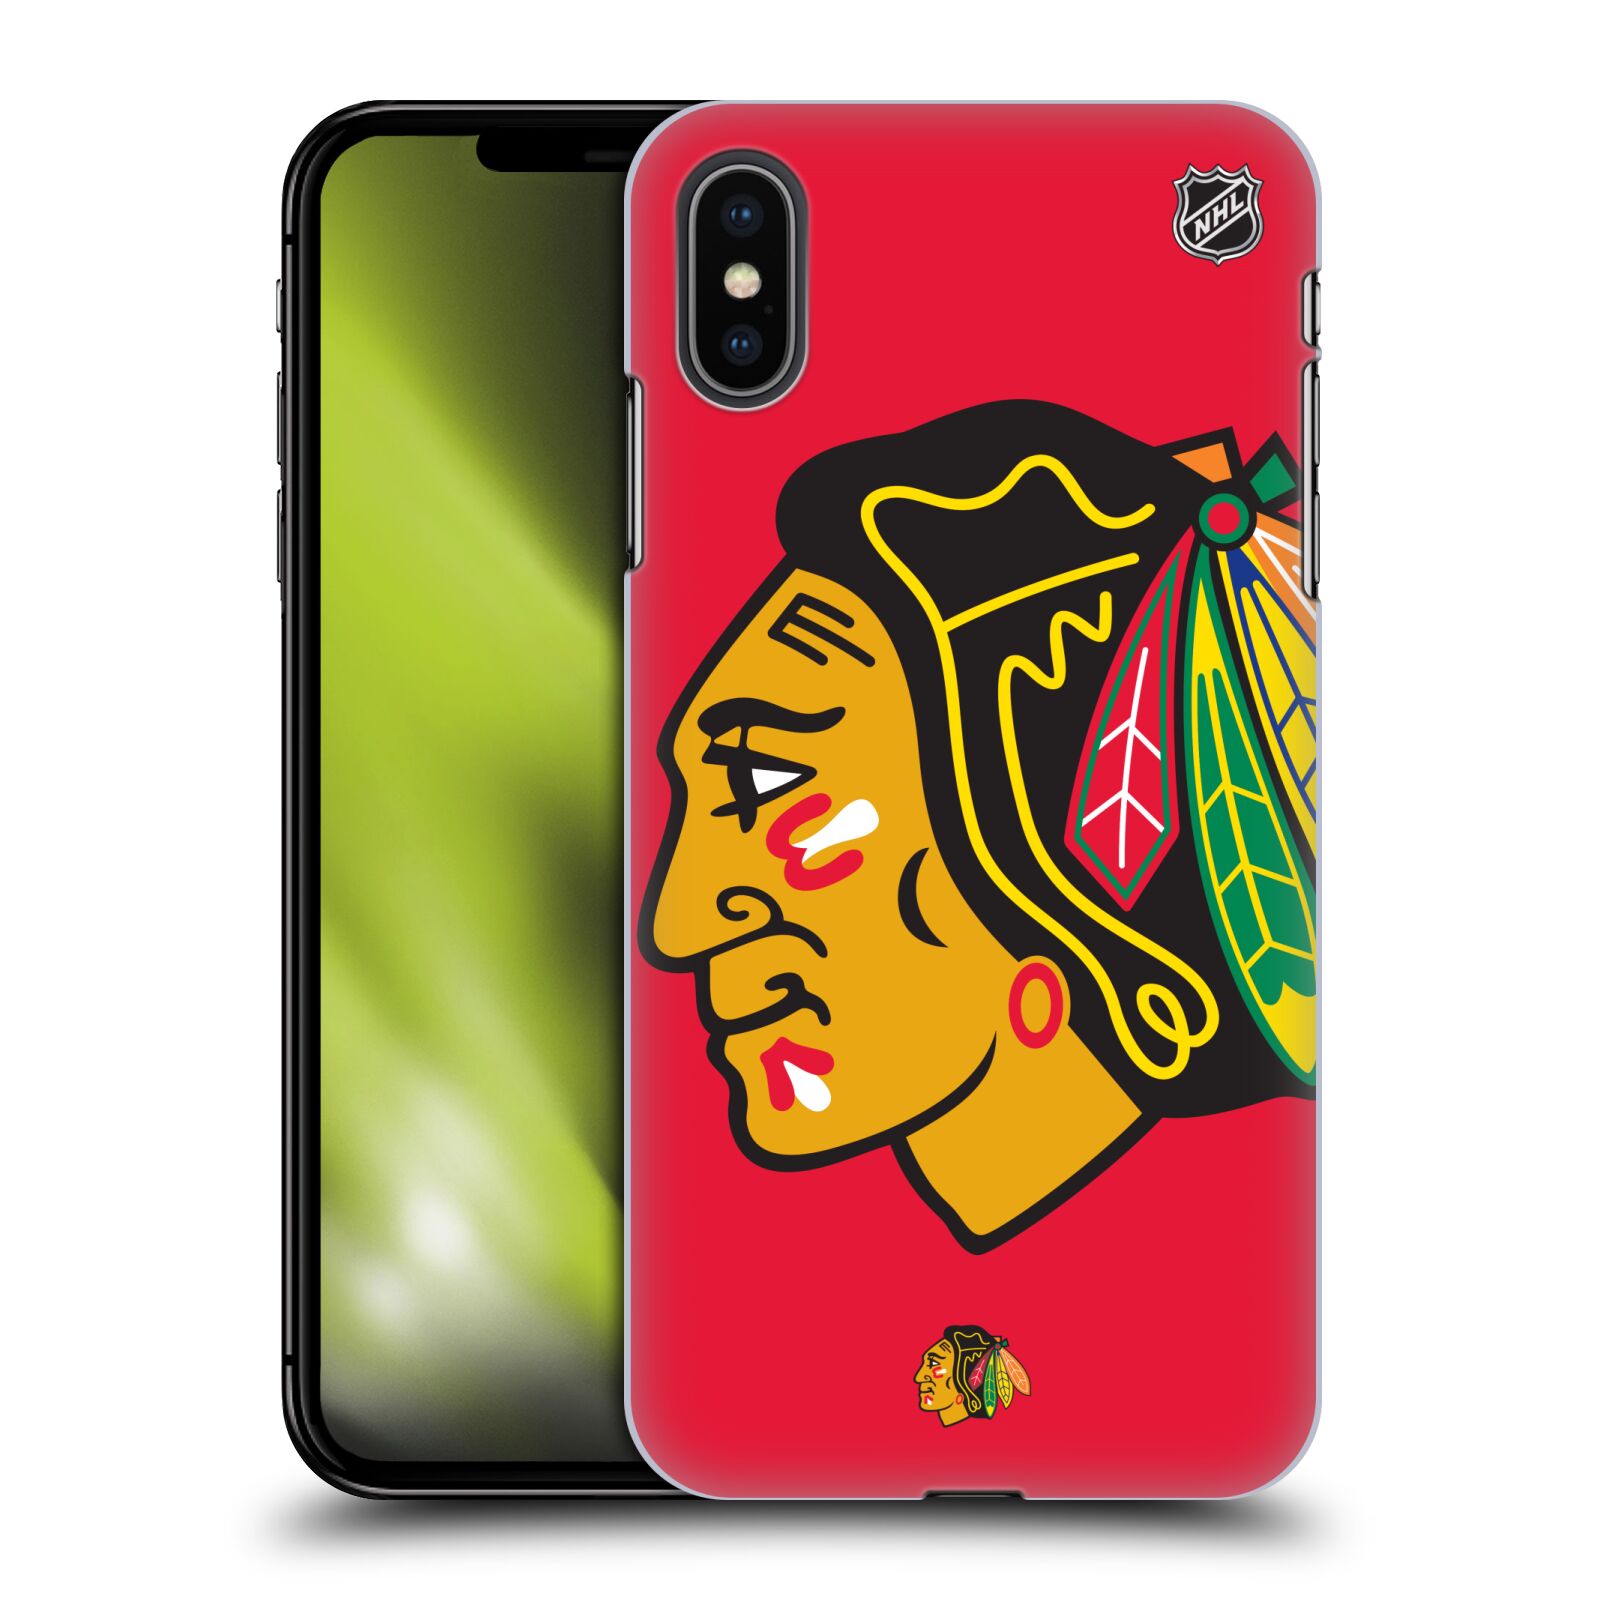 Pouzdro na mobil Apple Iphone XS MAX - HEAD CASE - Hokej NHL - Chicago Blackhawks - Velký znak